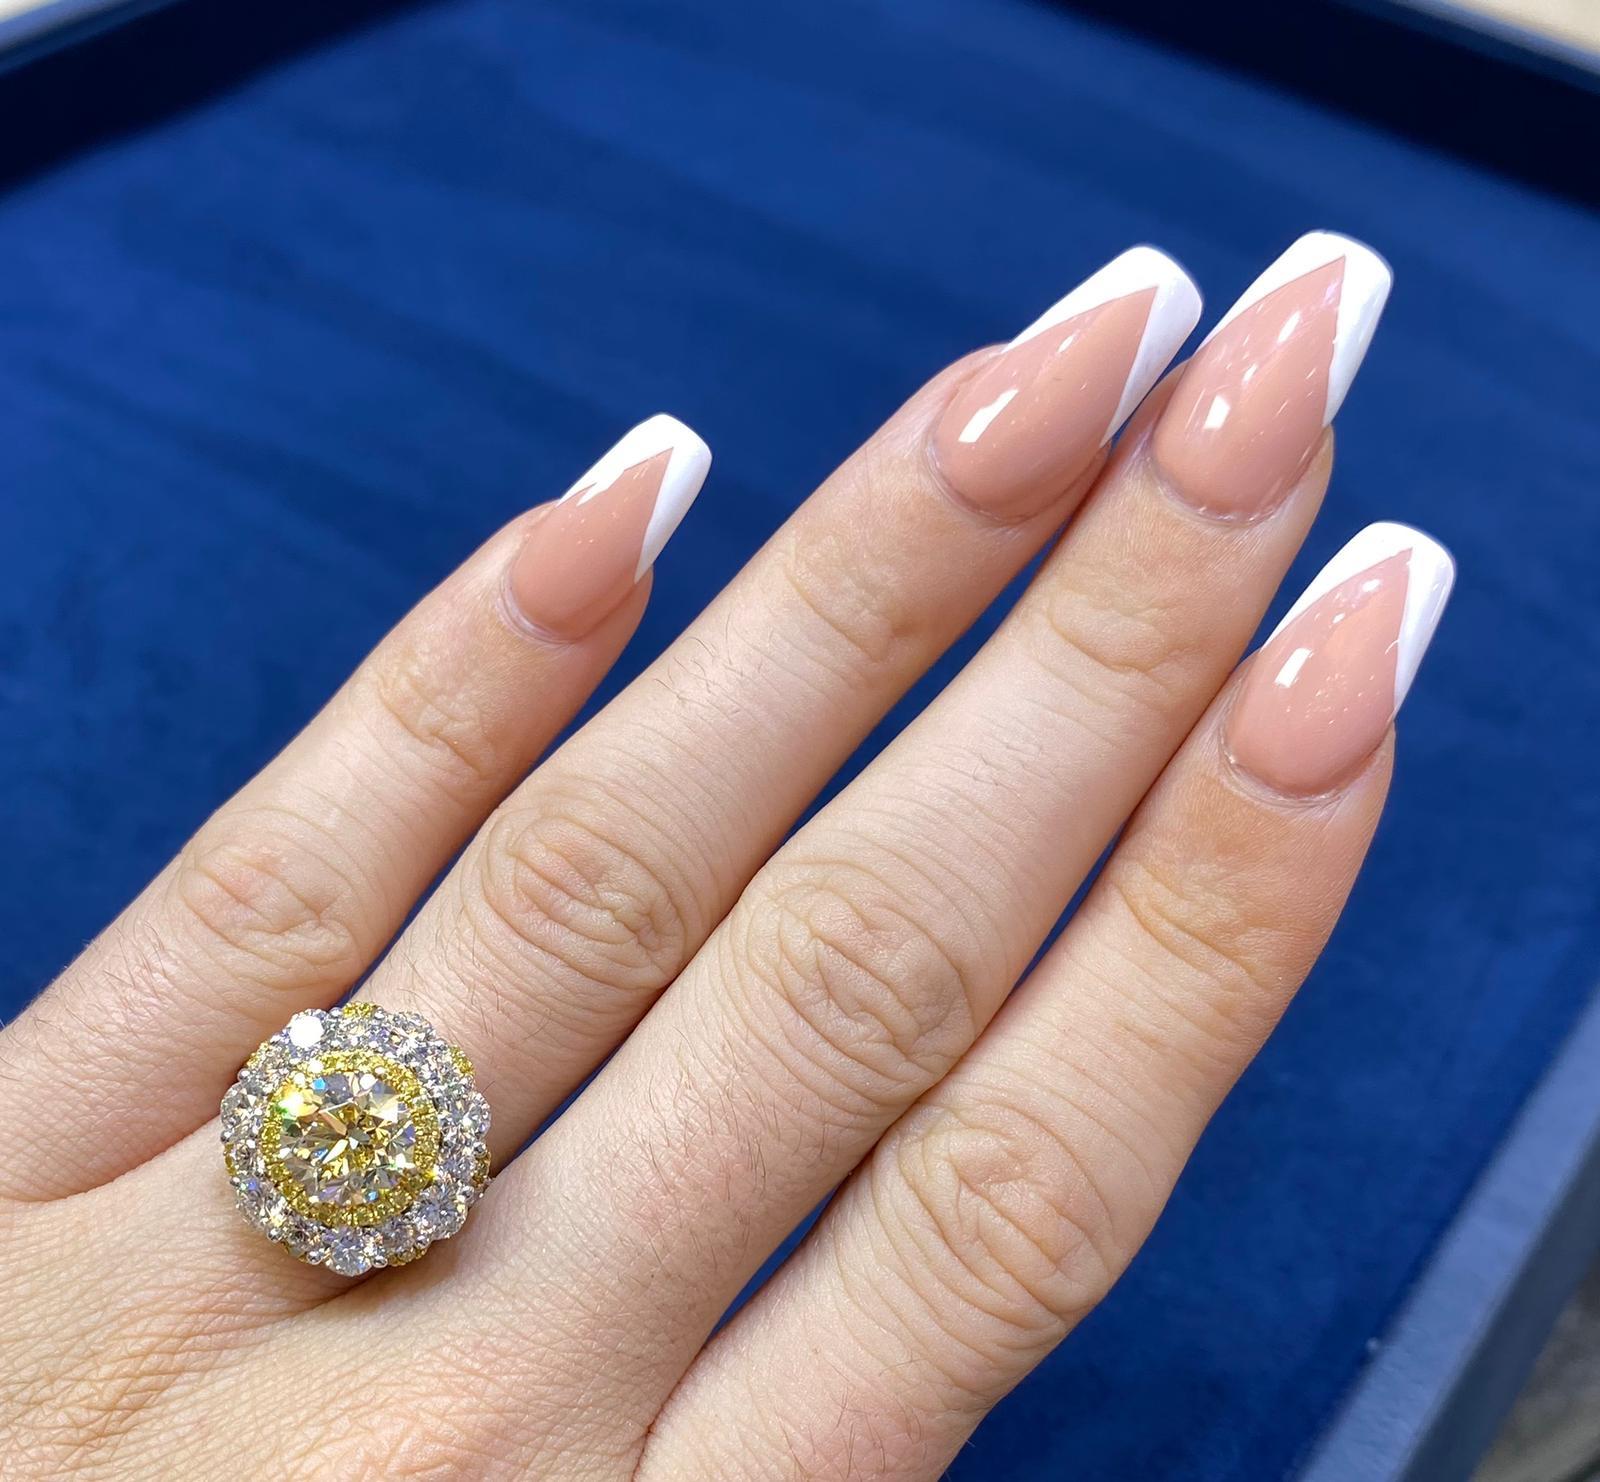 David Rosenberg 2.56 Carat Round Fancy Light Yellow VVS1 GIA Diamond Ring In New Condition For Sale In Boca Raton, FL